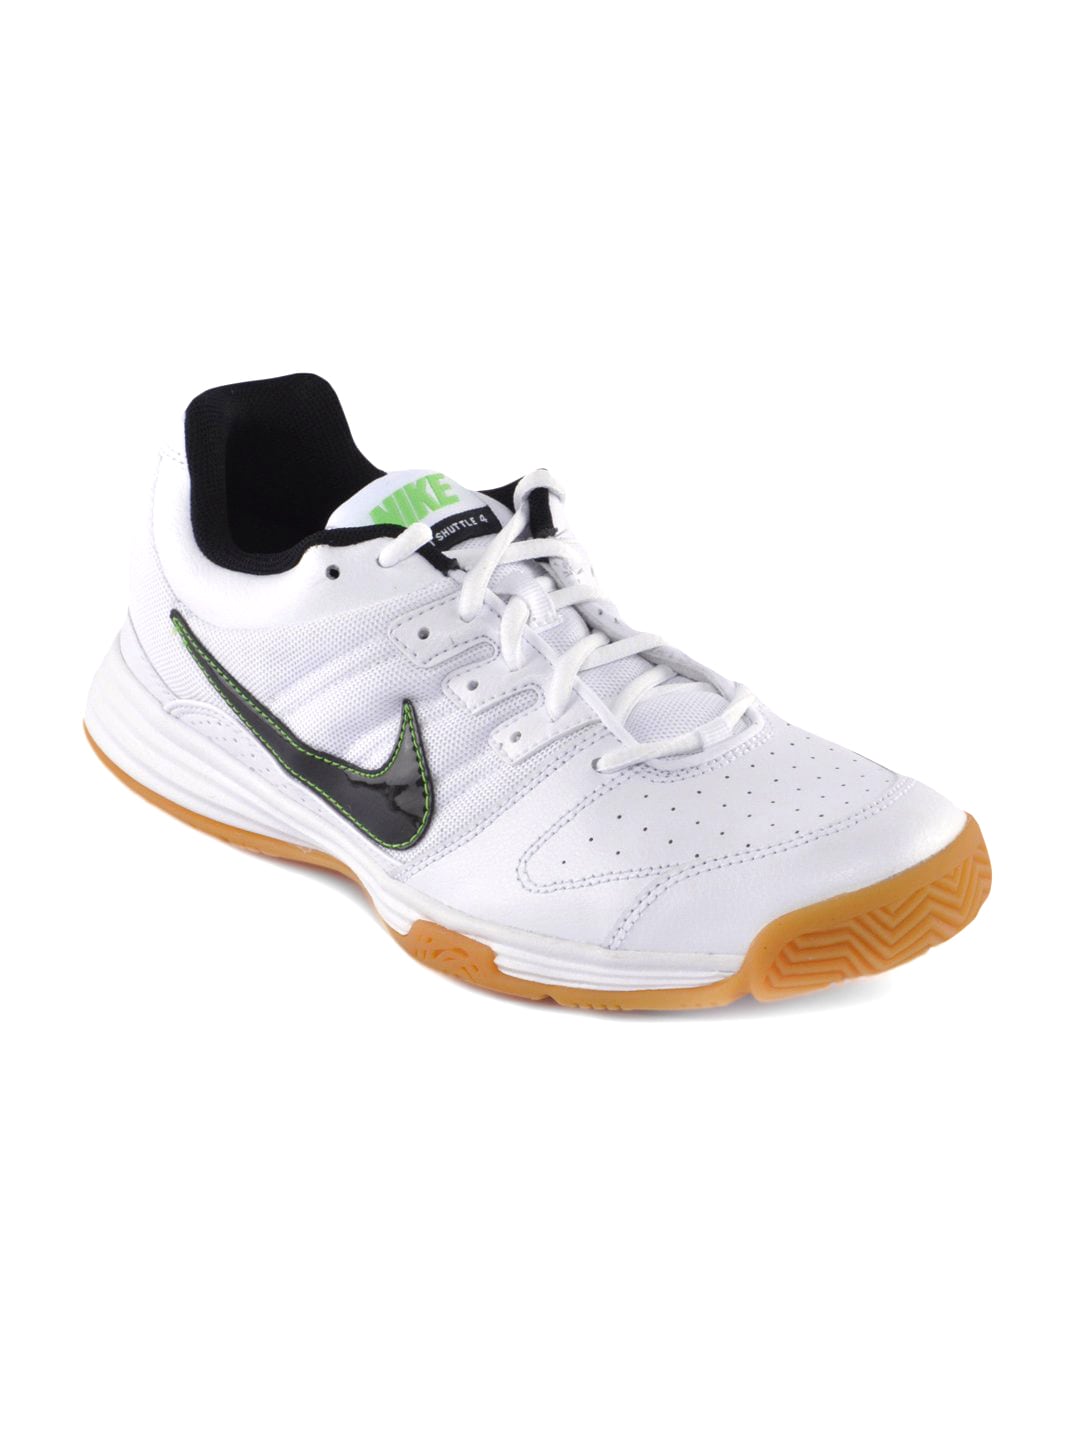 Nike Men White Court Shuttle IV Sports Shoes